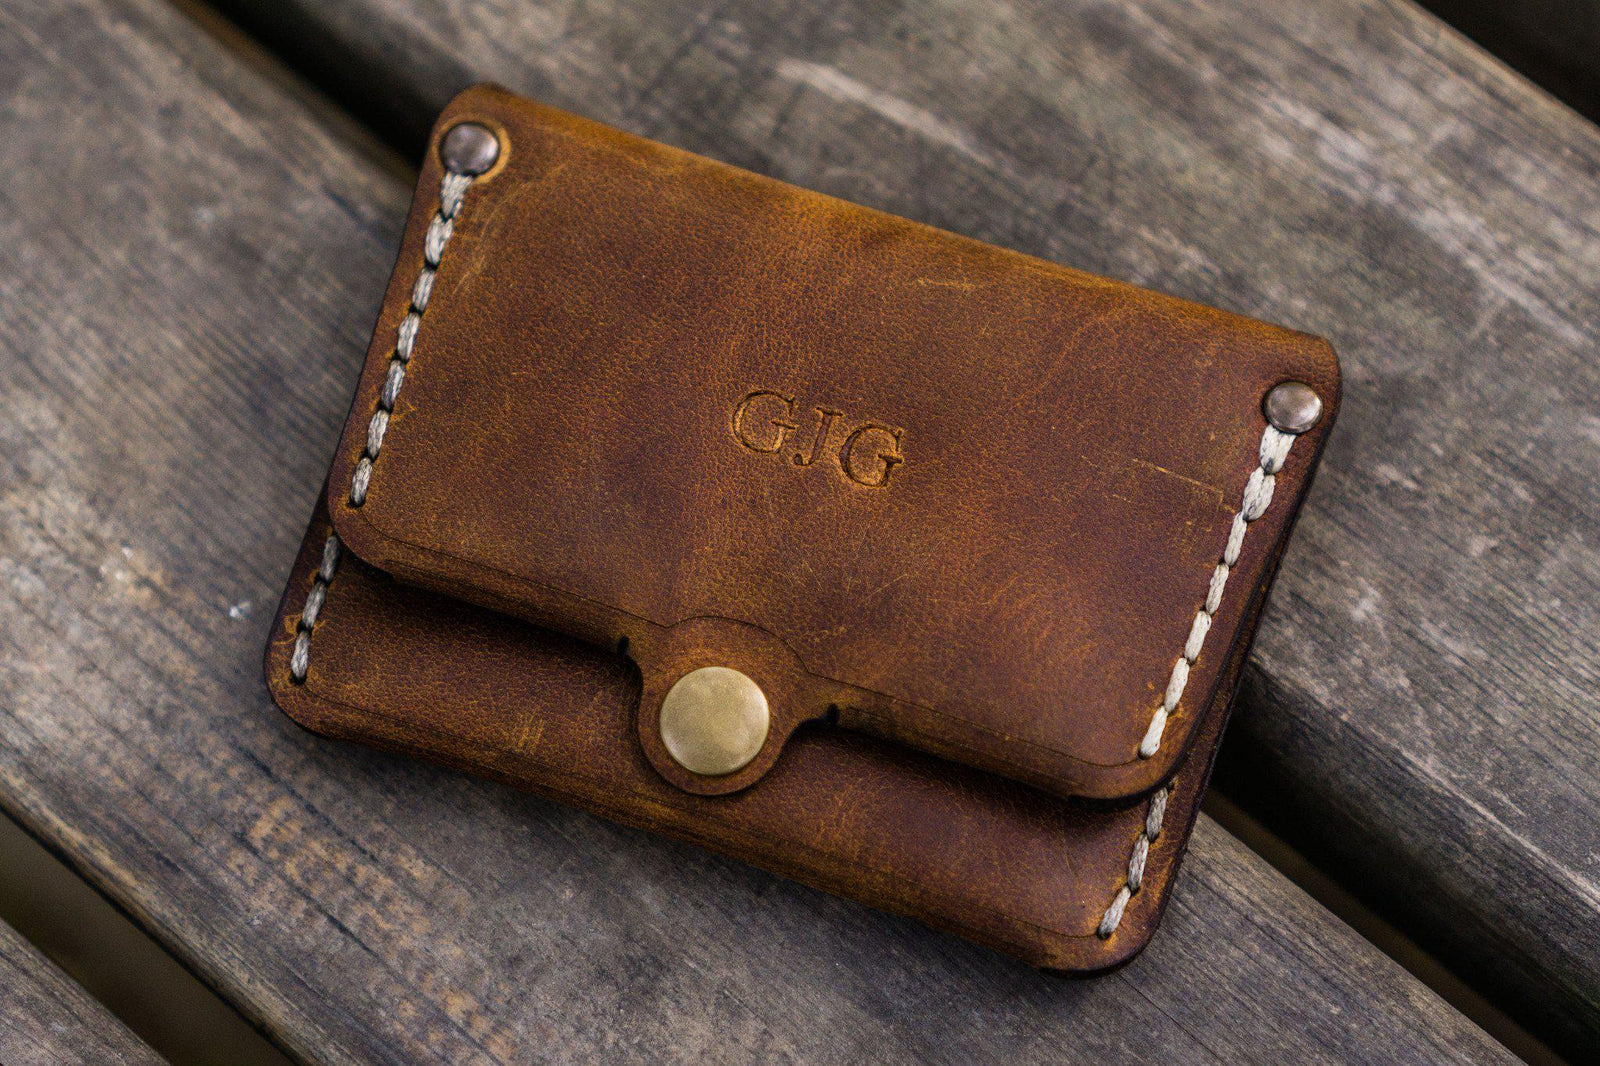  Leather Folded Card Wallet - Handmade Card Holder